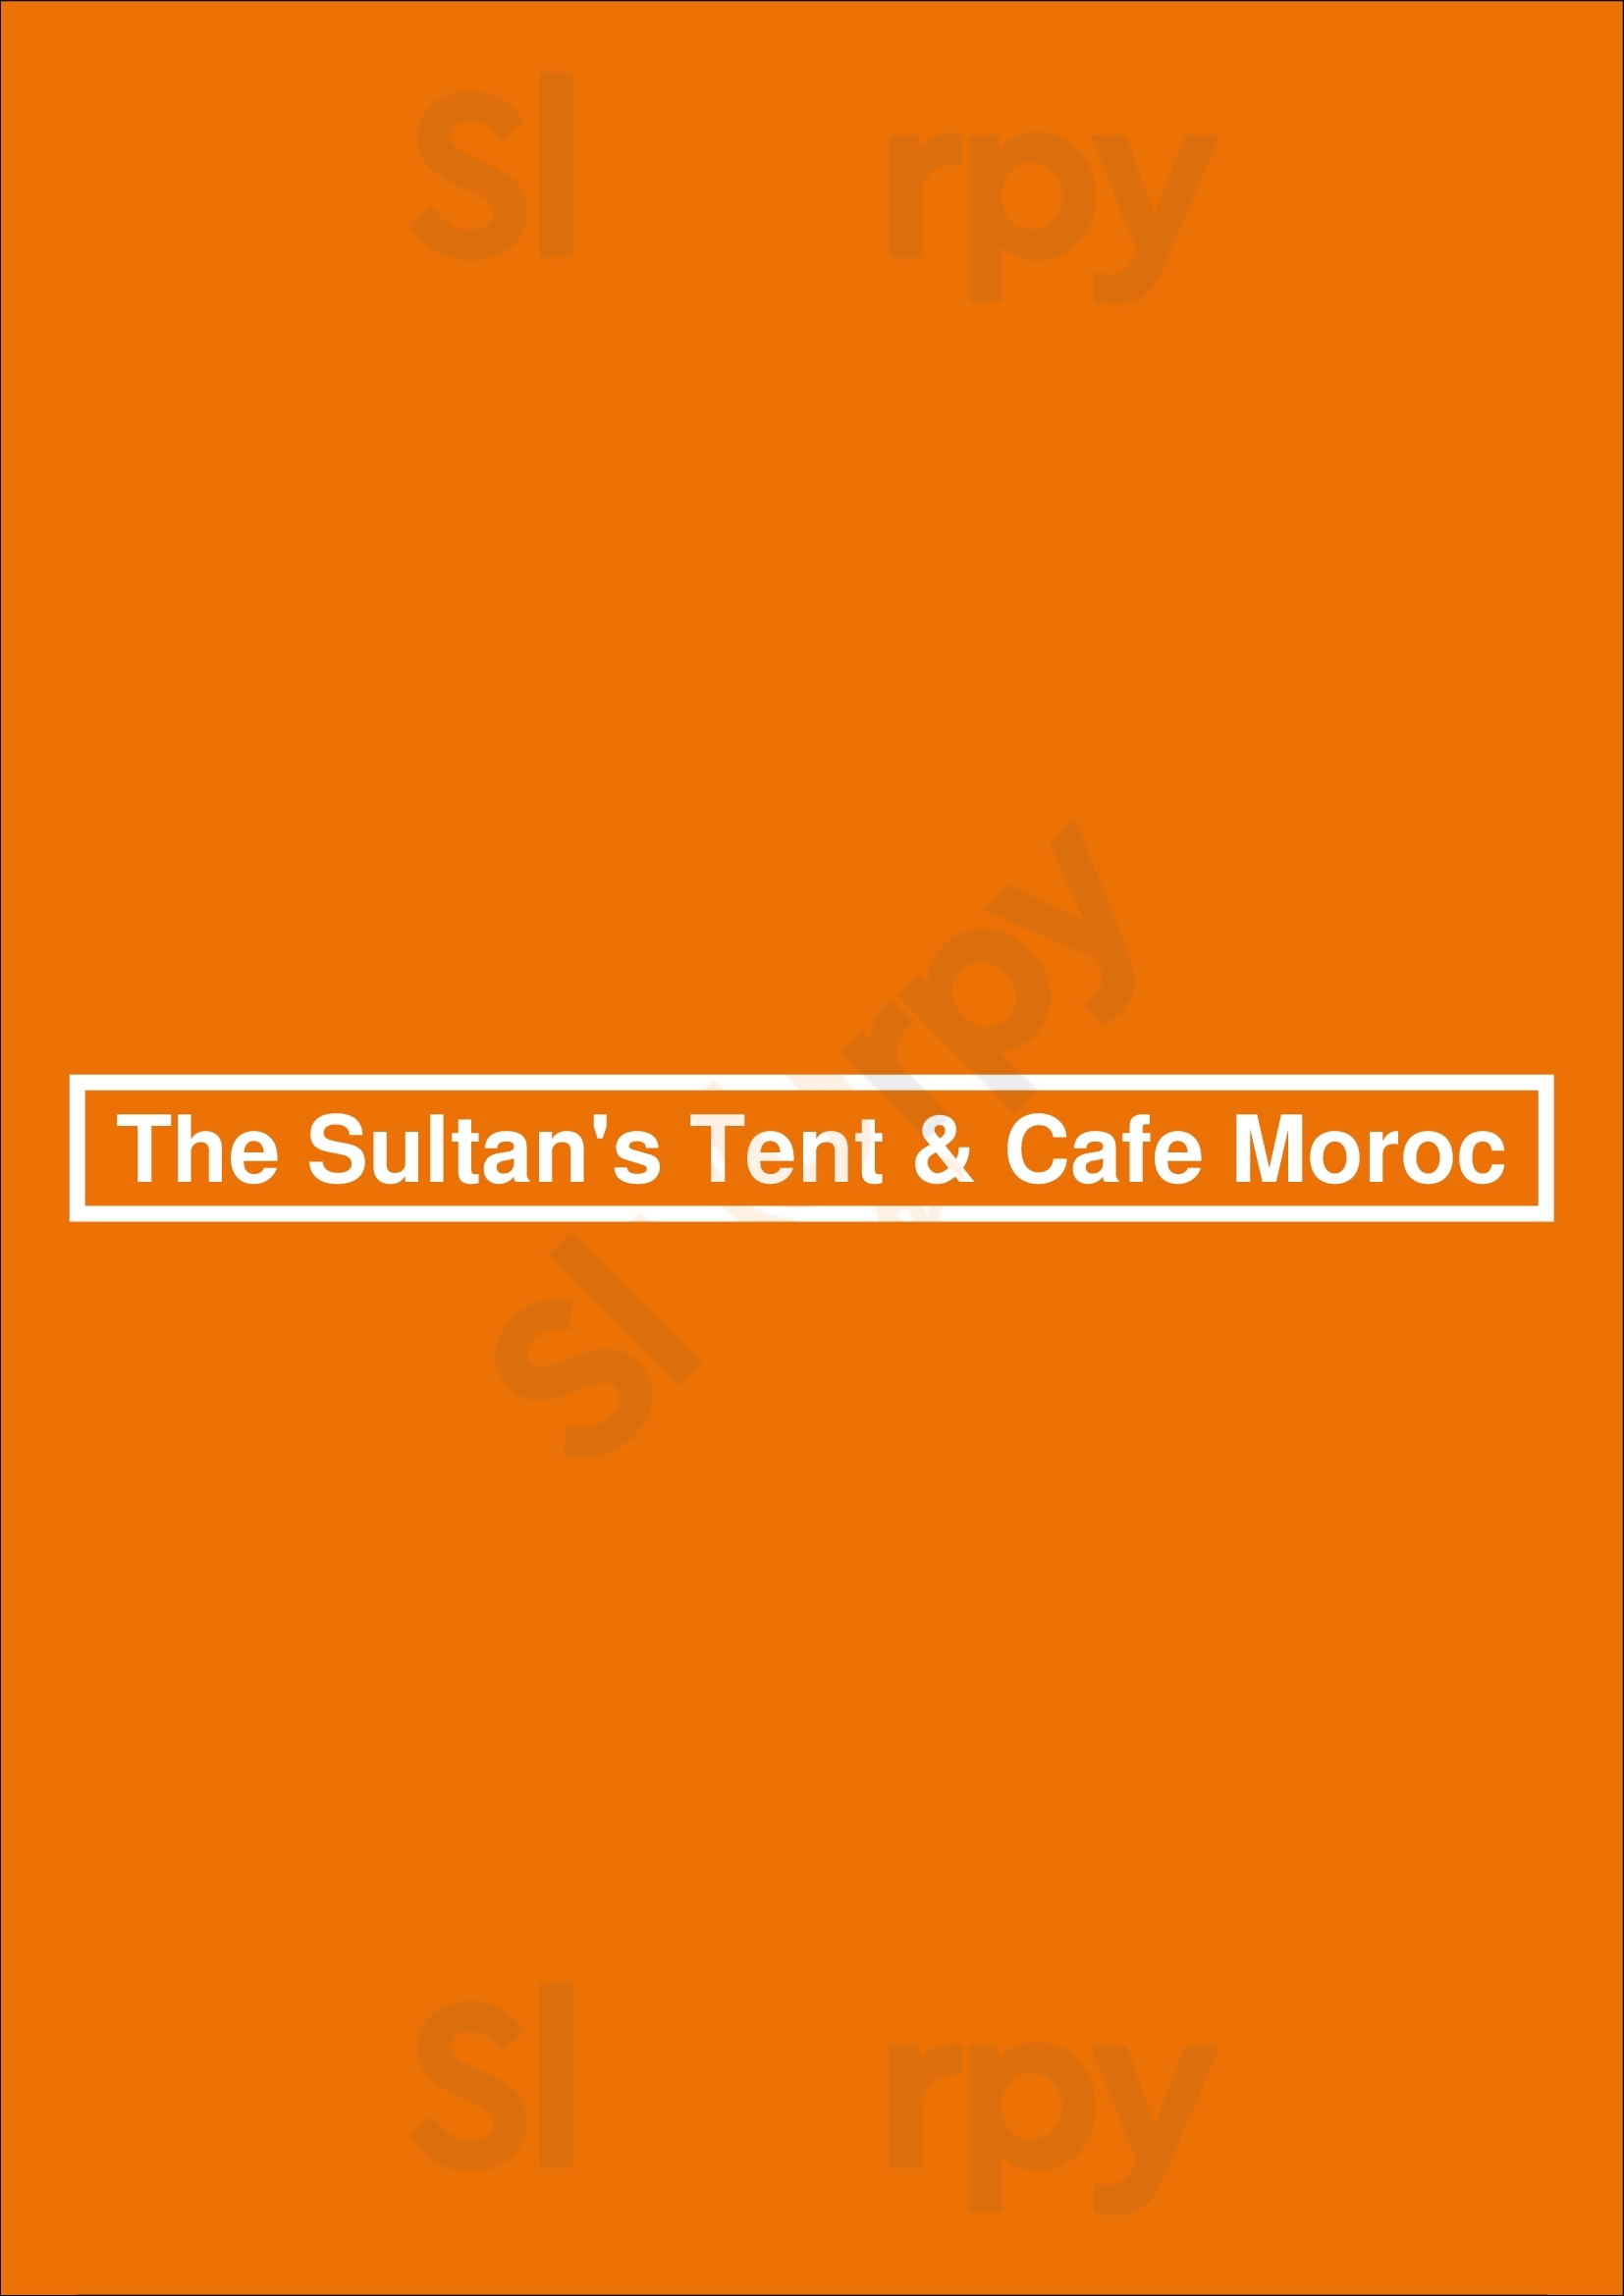 The Sultan's Tent & Cafe Moroc Toronto Menu - 1